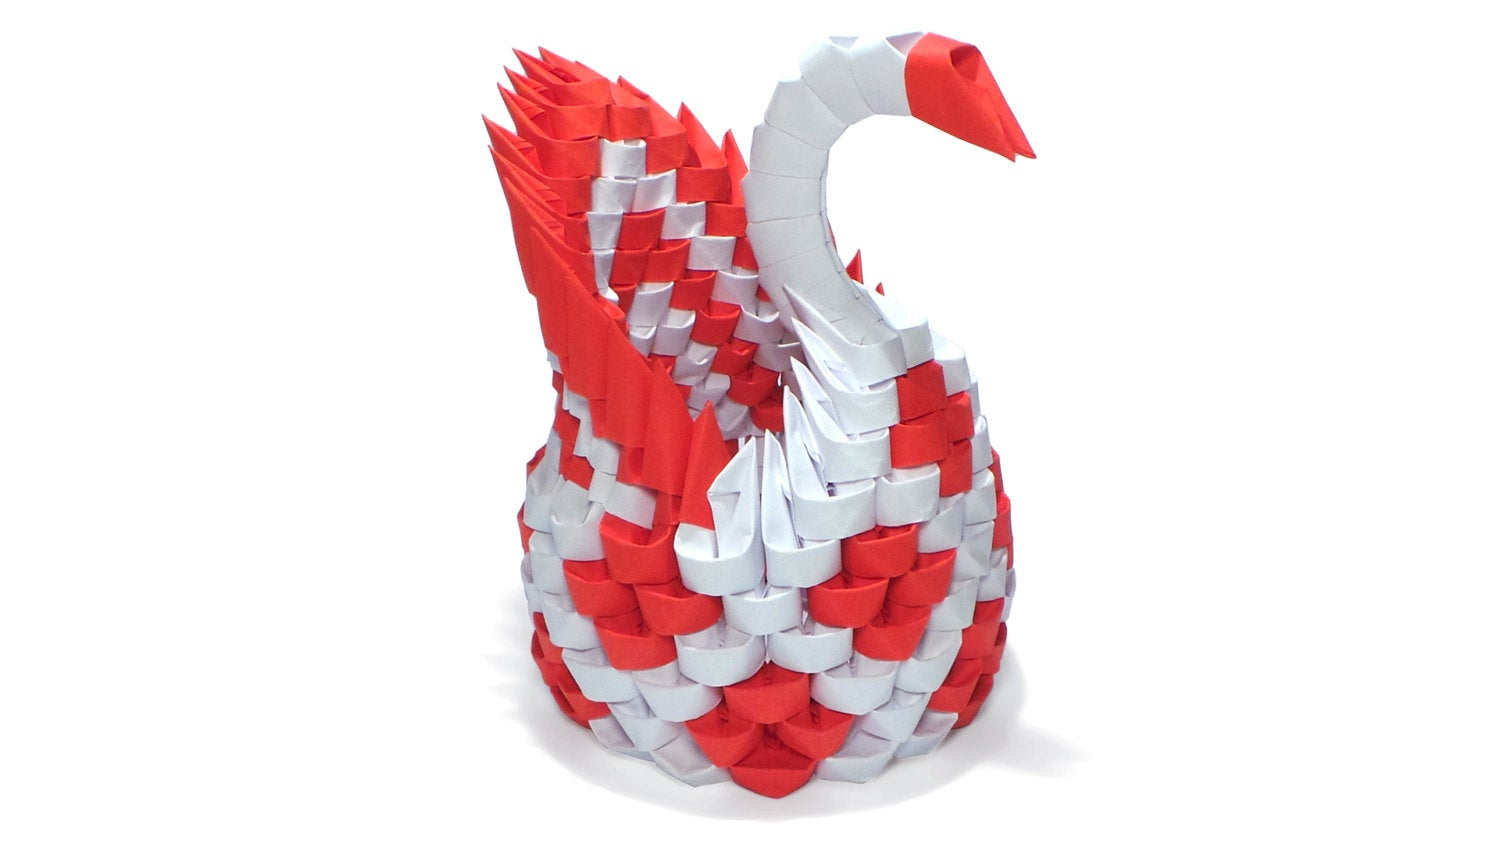 3D Origami Small Swan 3d Origami Mini Diamon Patter Swan Lots Of Colors Etsy